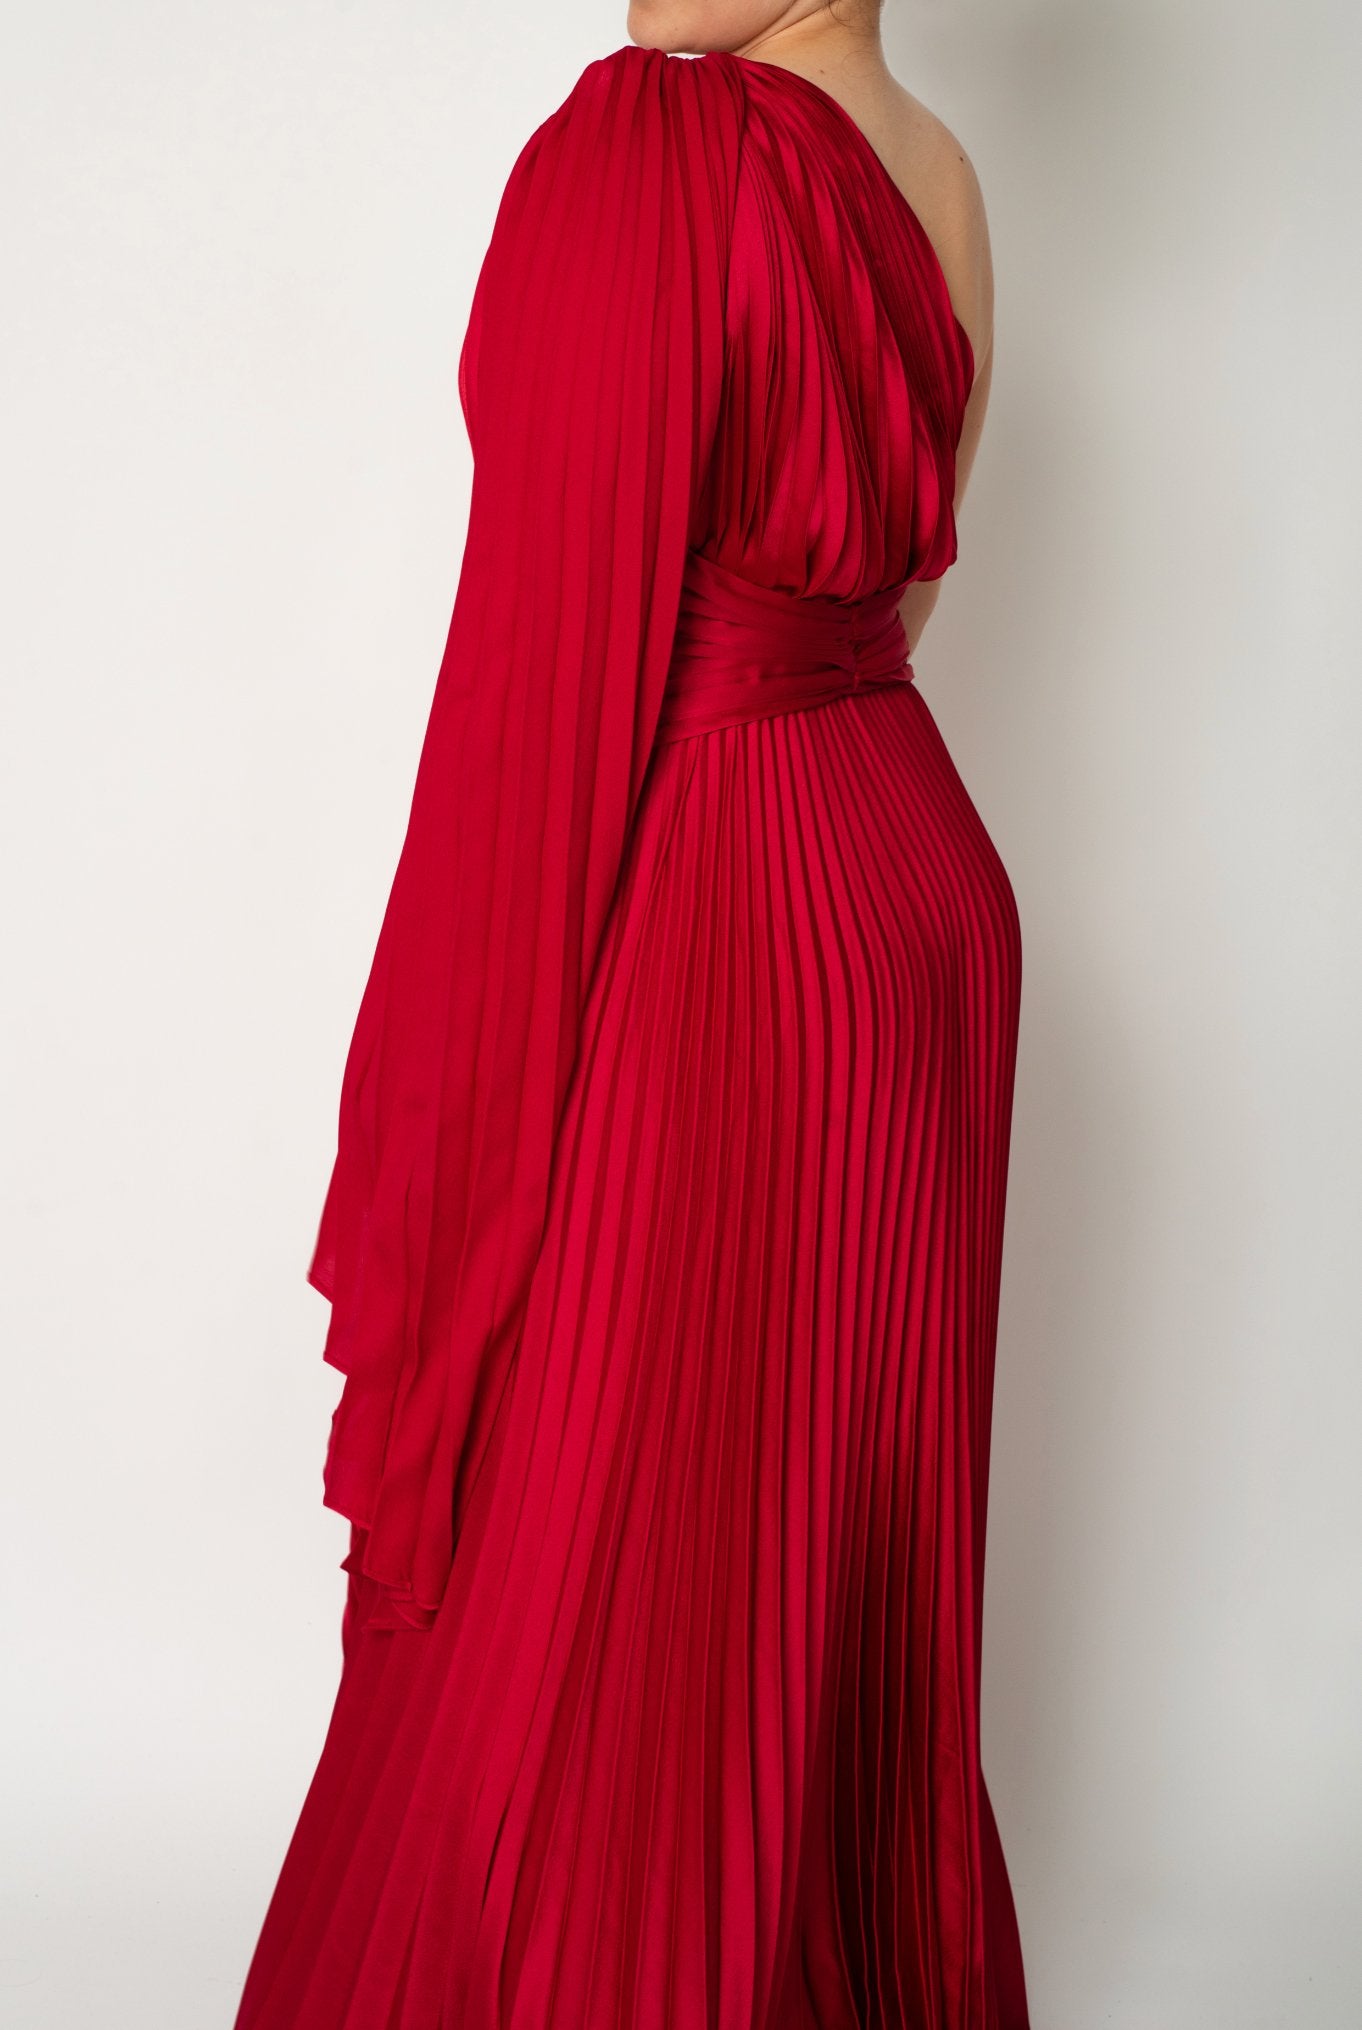 Mabela - rojo venta - Lend the Trend renta de vestidos mexico